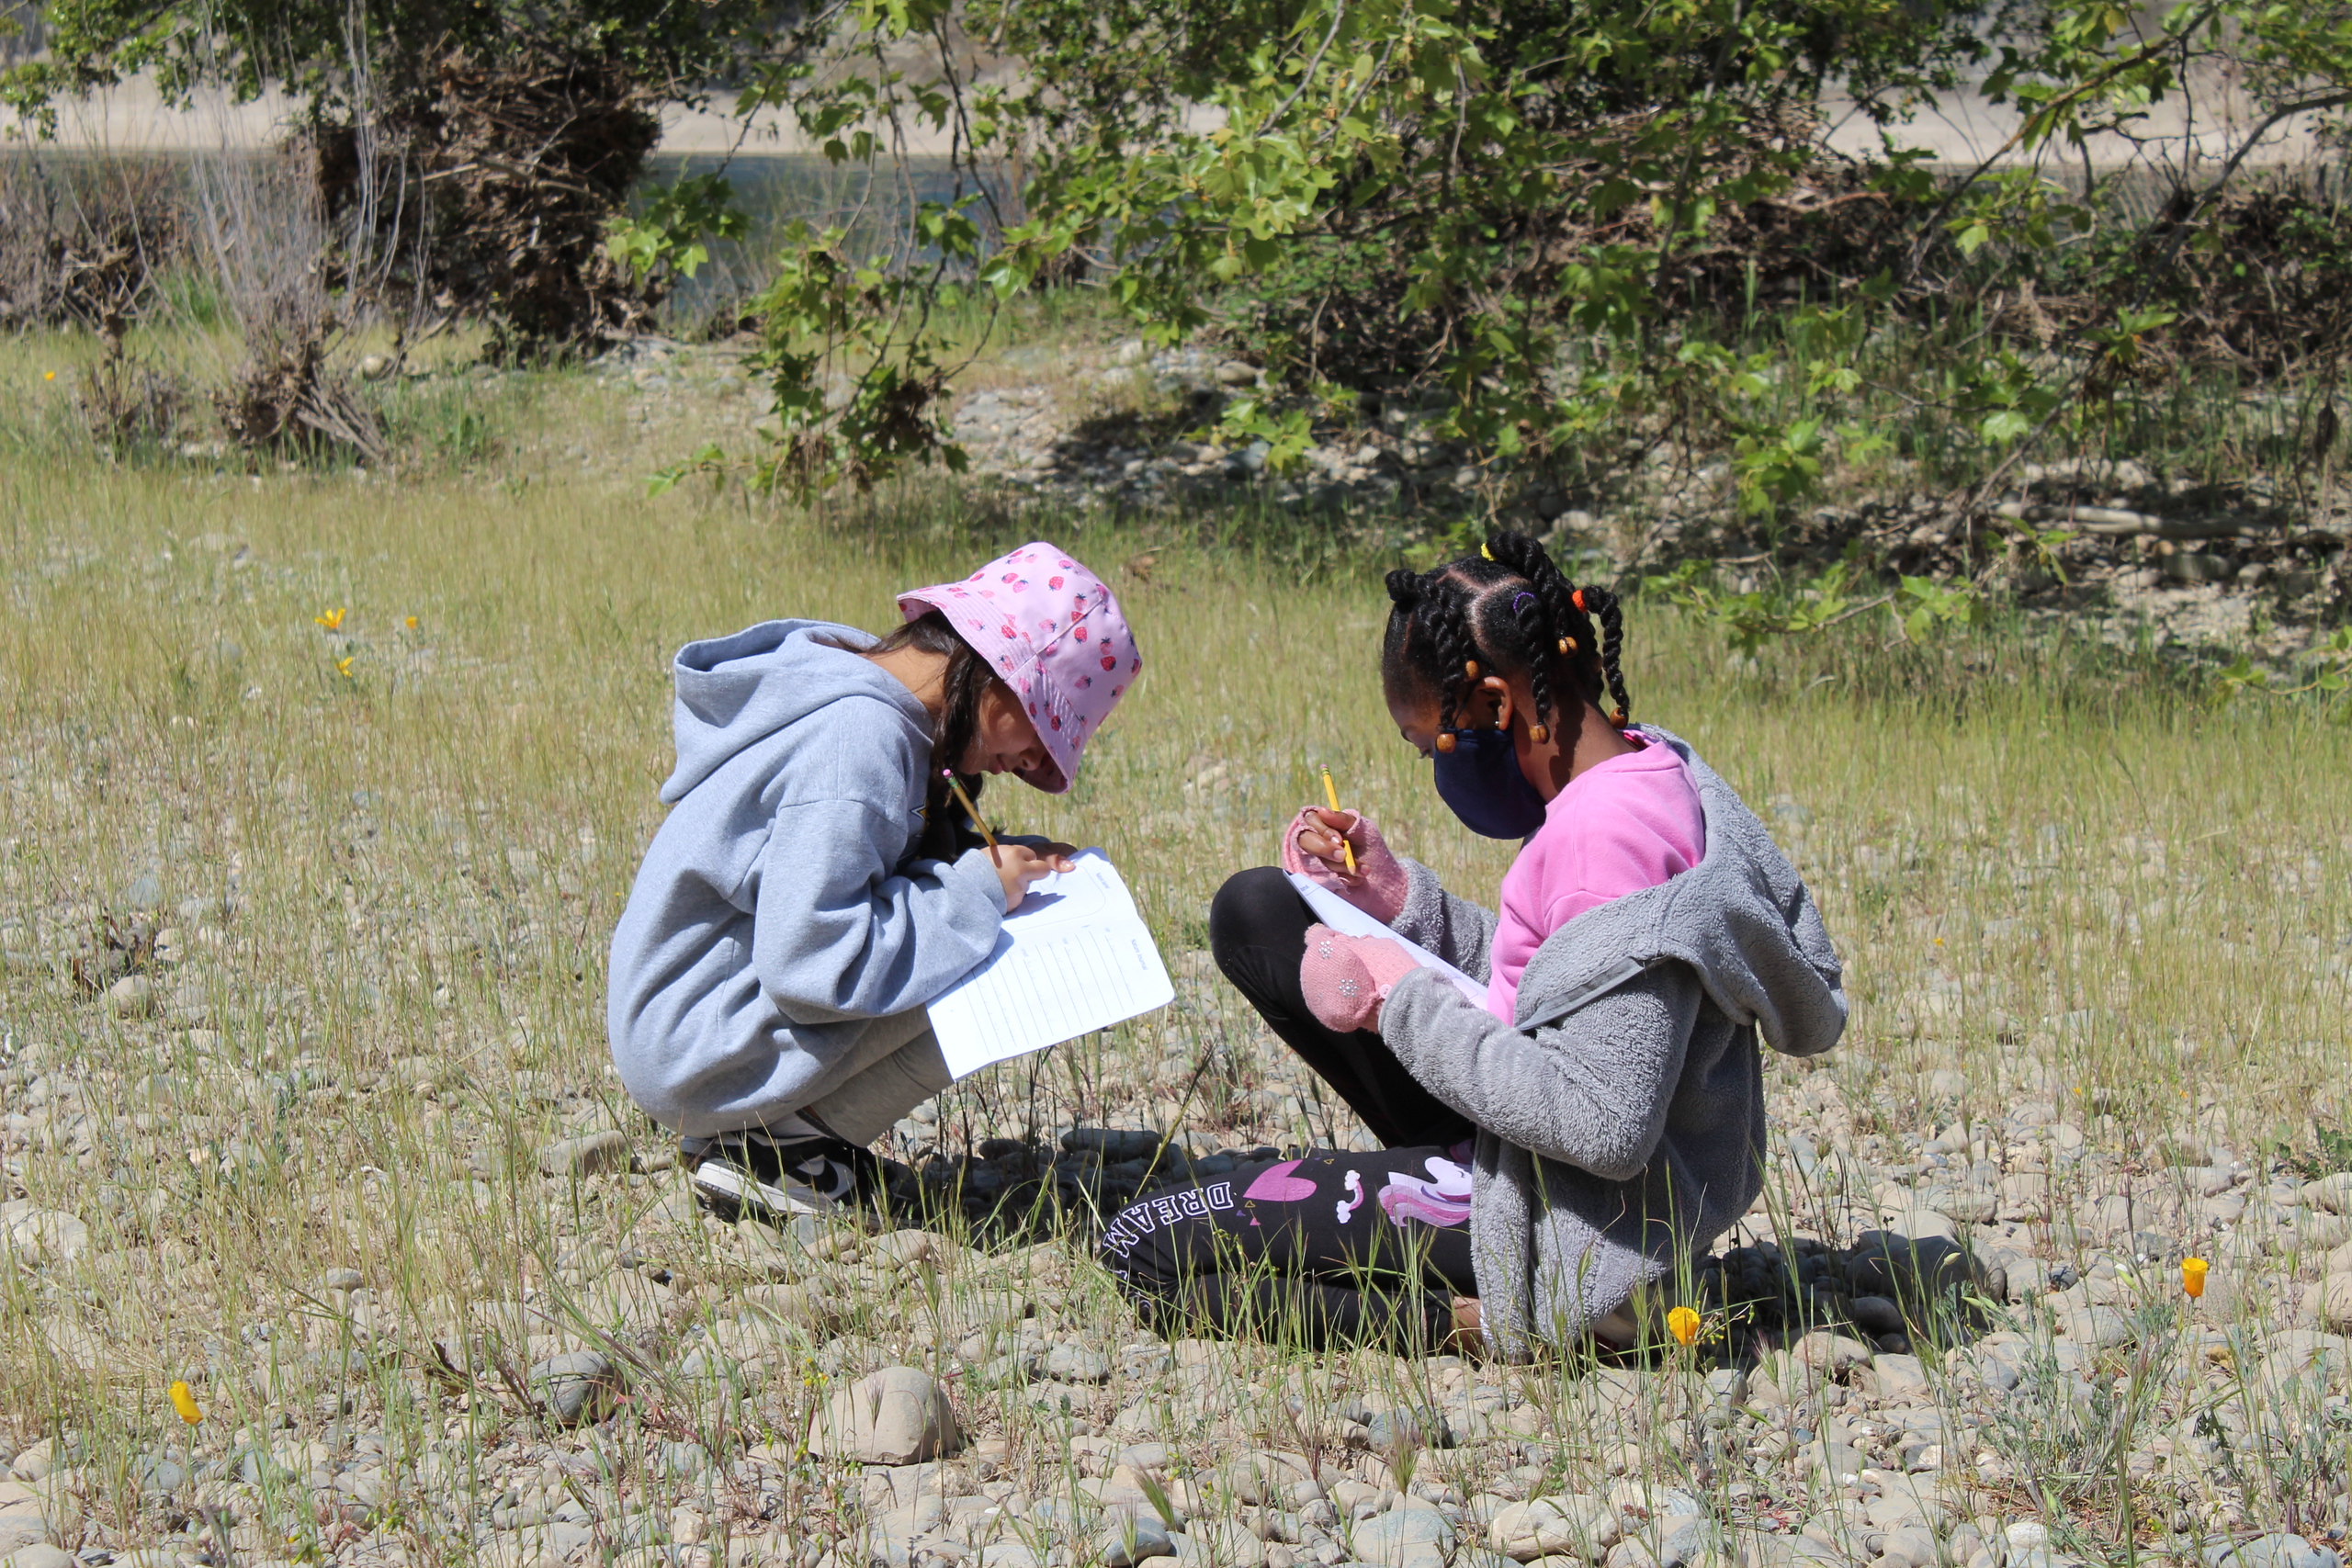 Two kids sit in a field writing in notebooks